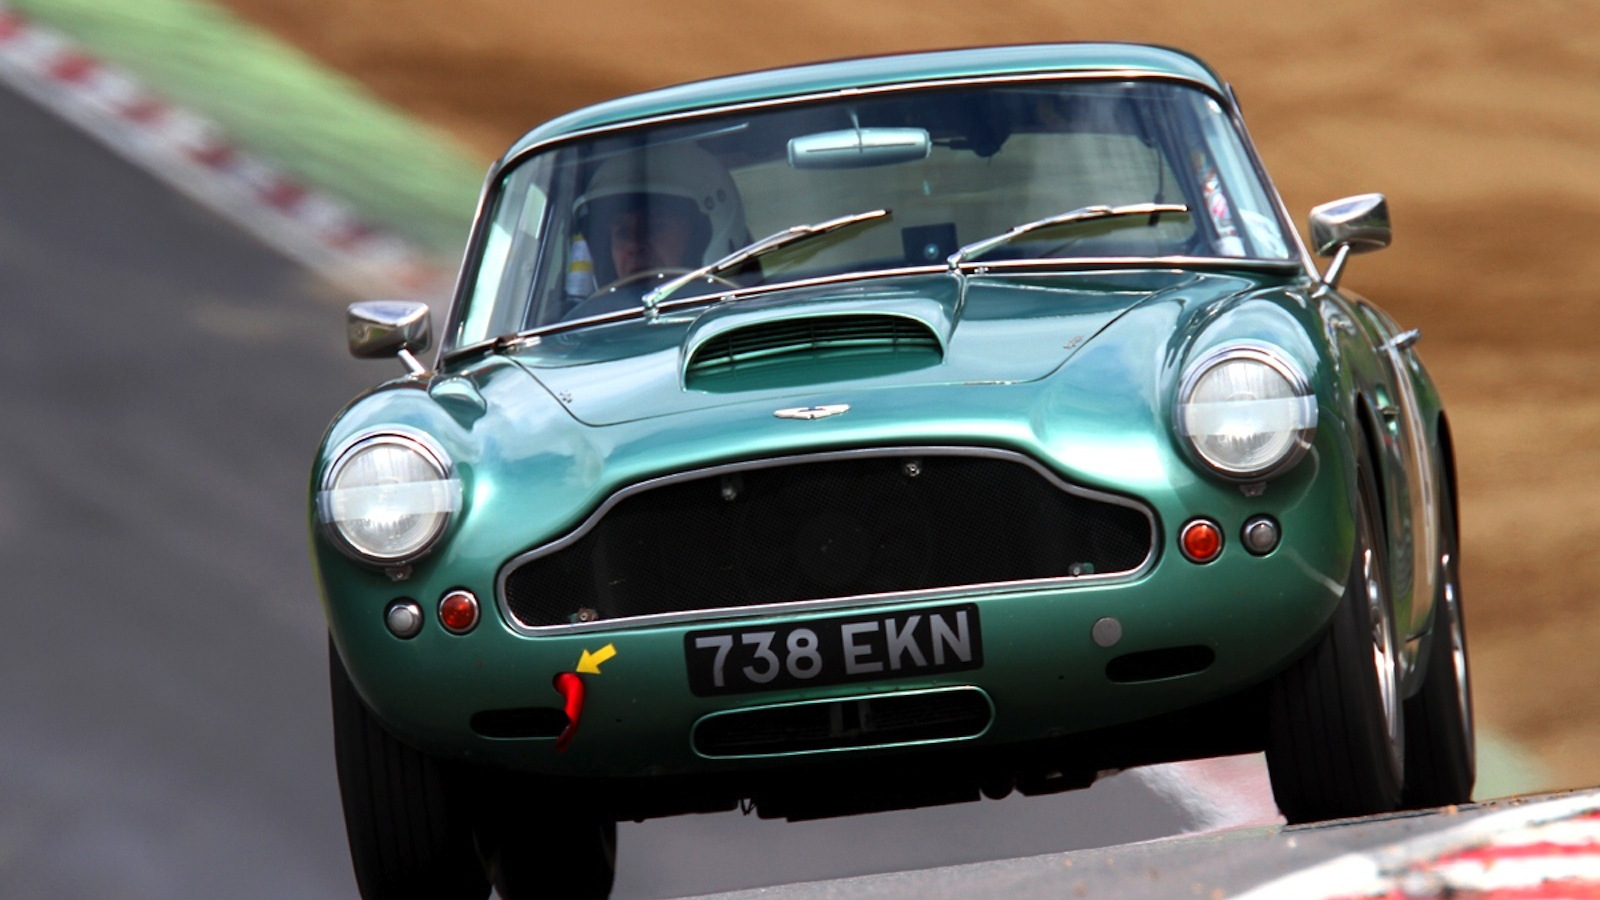 Aston Martin's centenary celebration includes vintage racing at Brands Hatch - image: Aston Martin